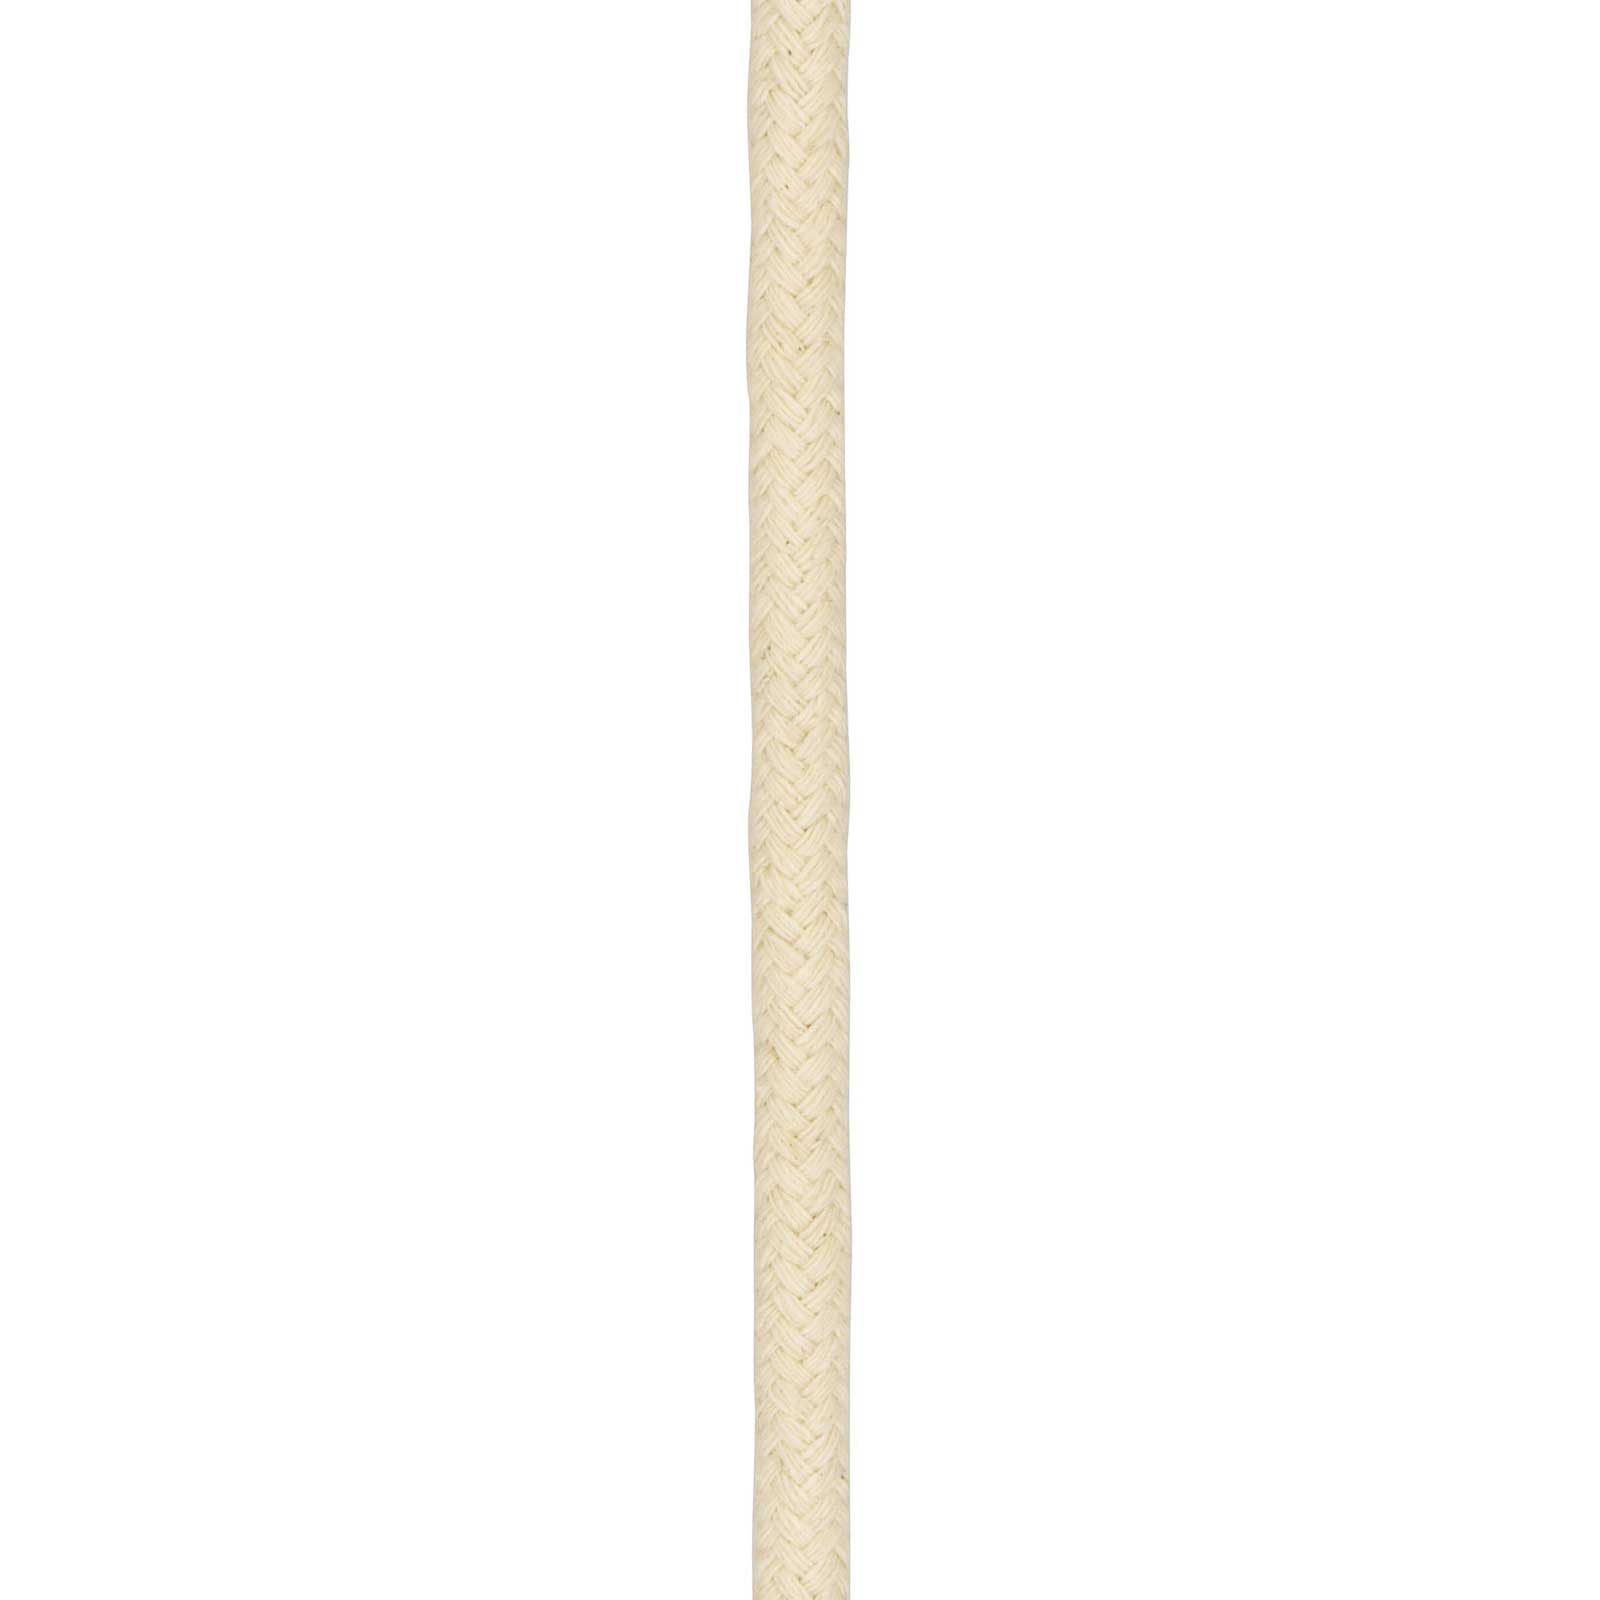 Kälber Spielseil Baumwolle auf Spule 8 mm